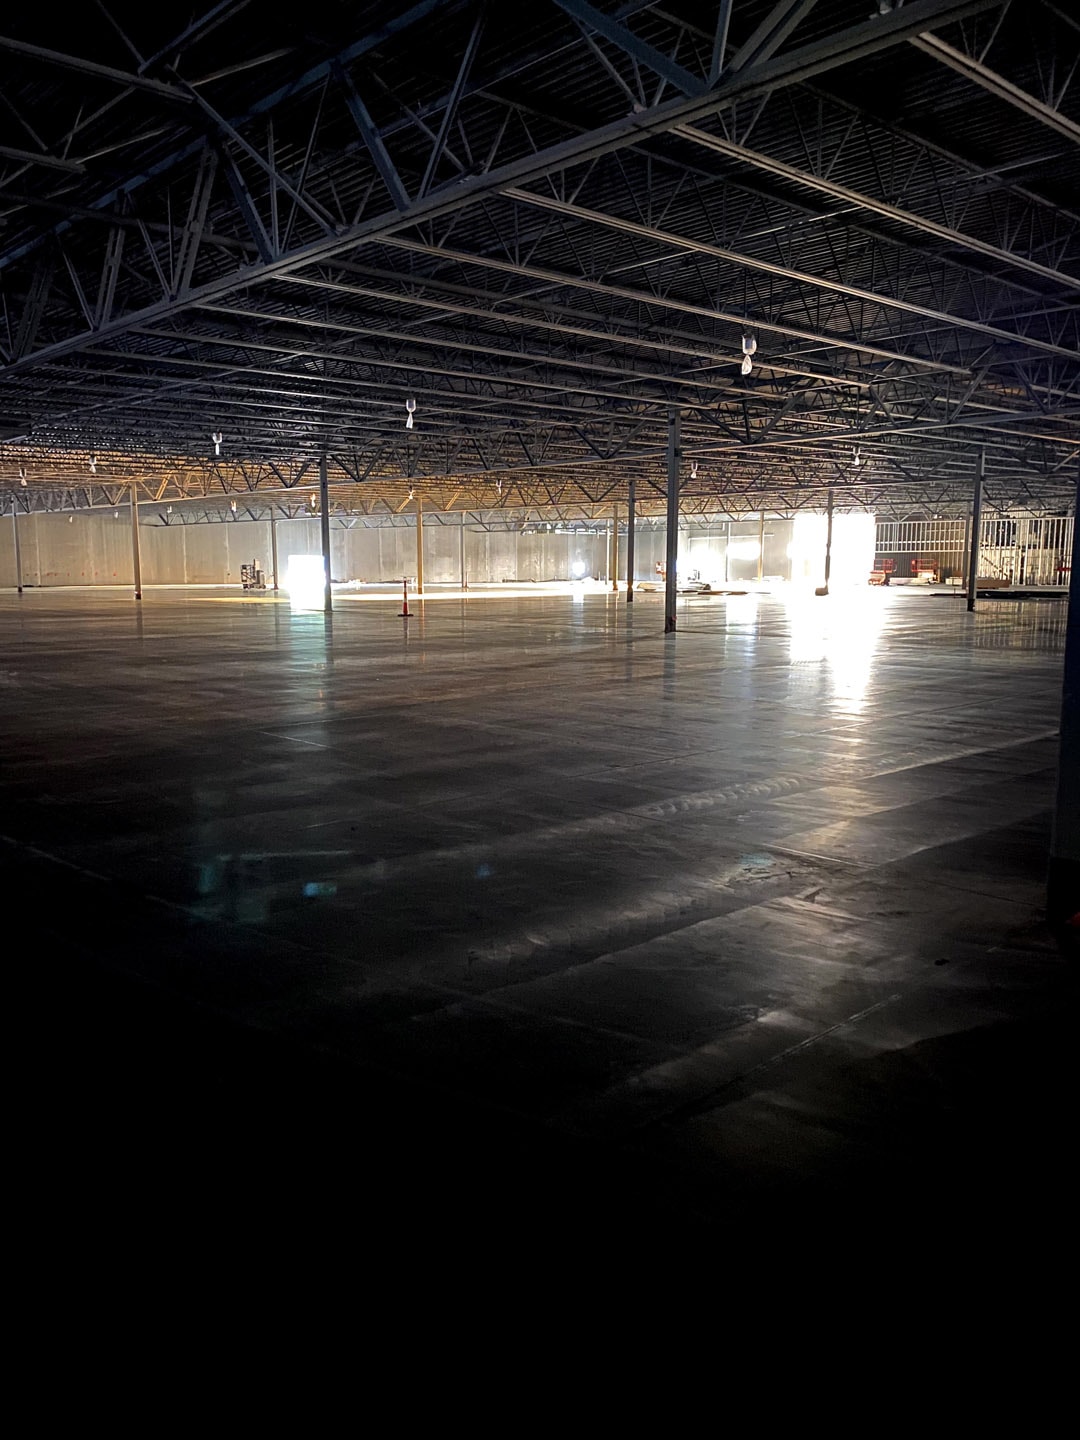 Interior new concrete flooring in empty industrial building